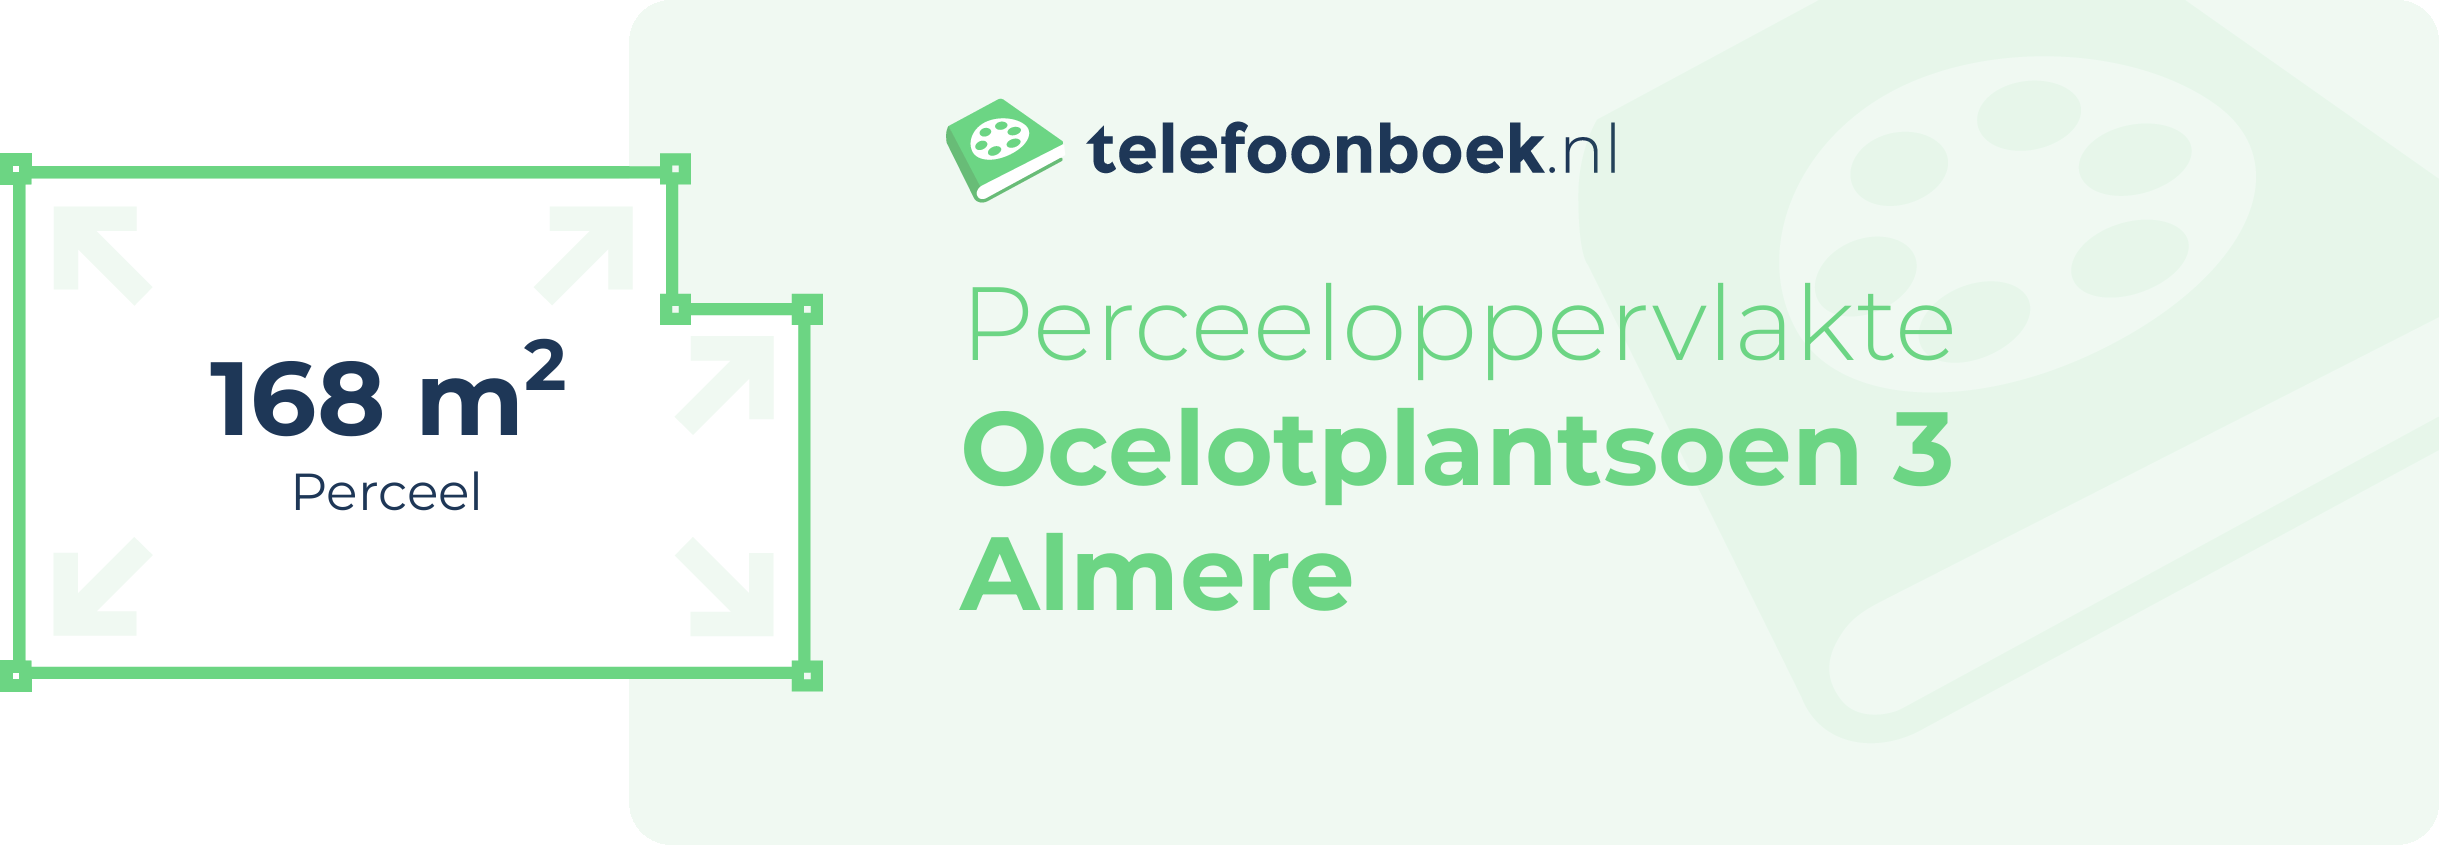 Perceeloppervlakte Ocelotplantsoen 3 Almere